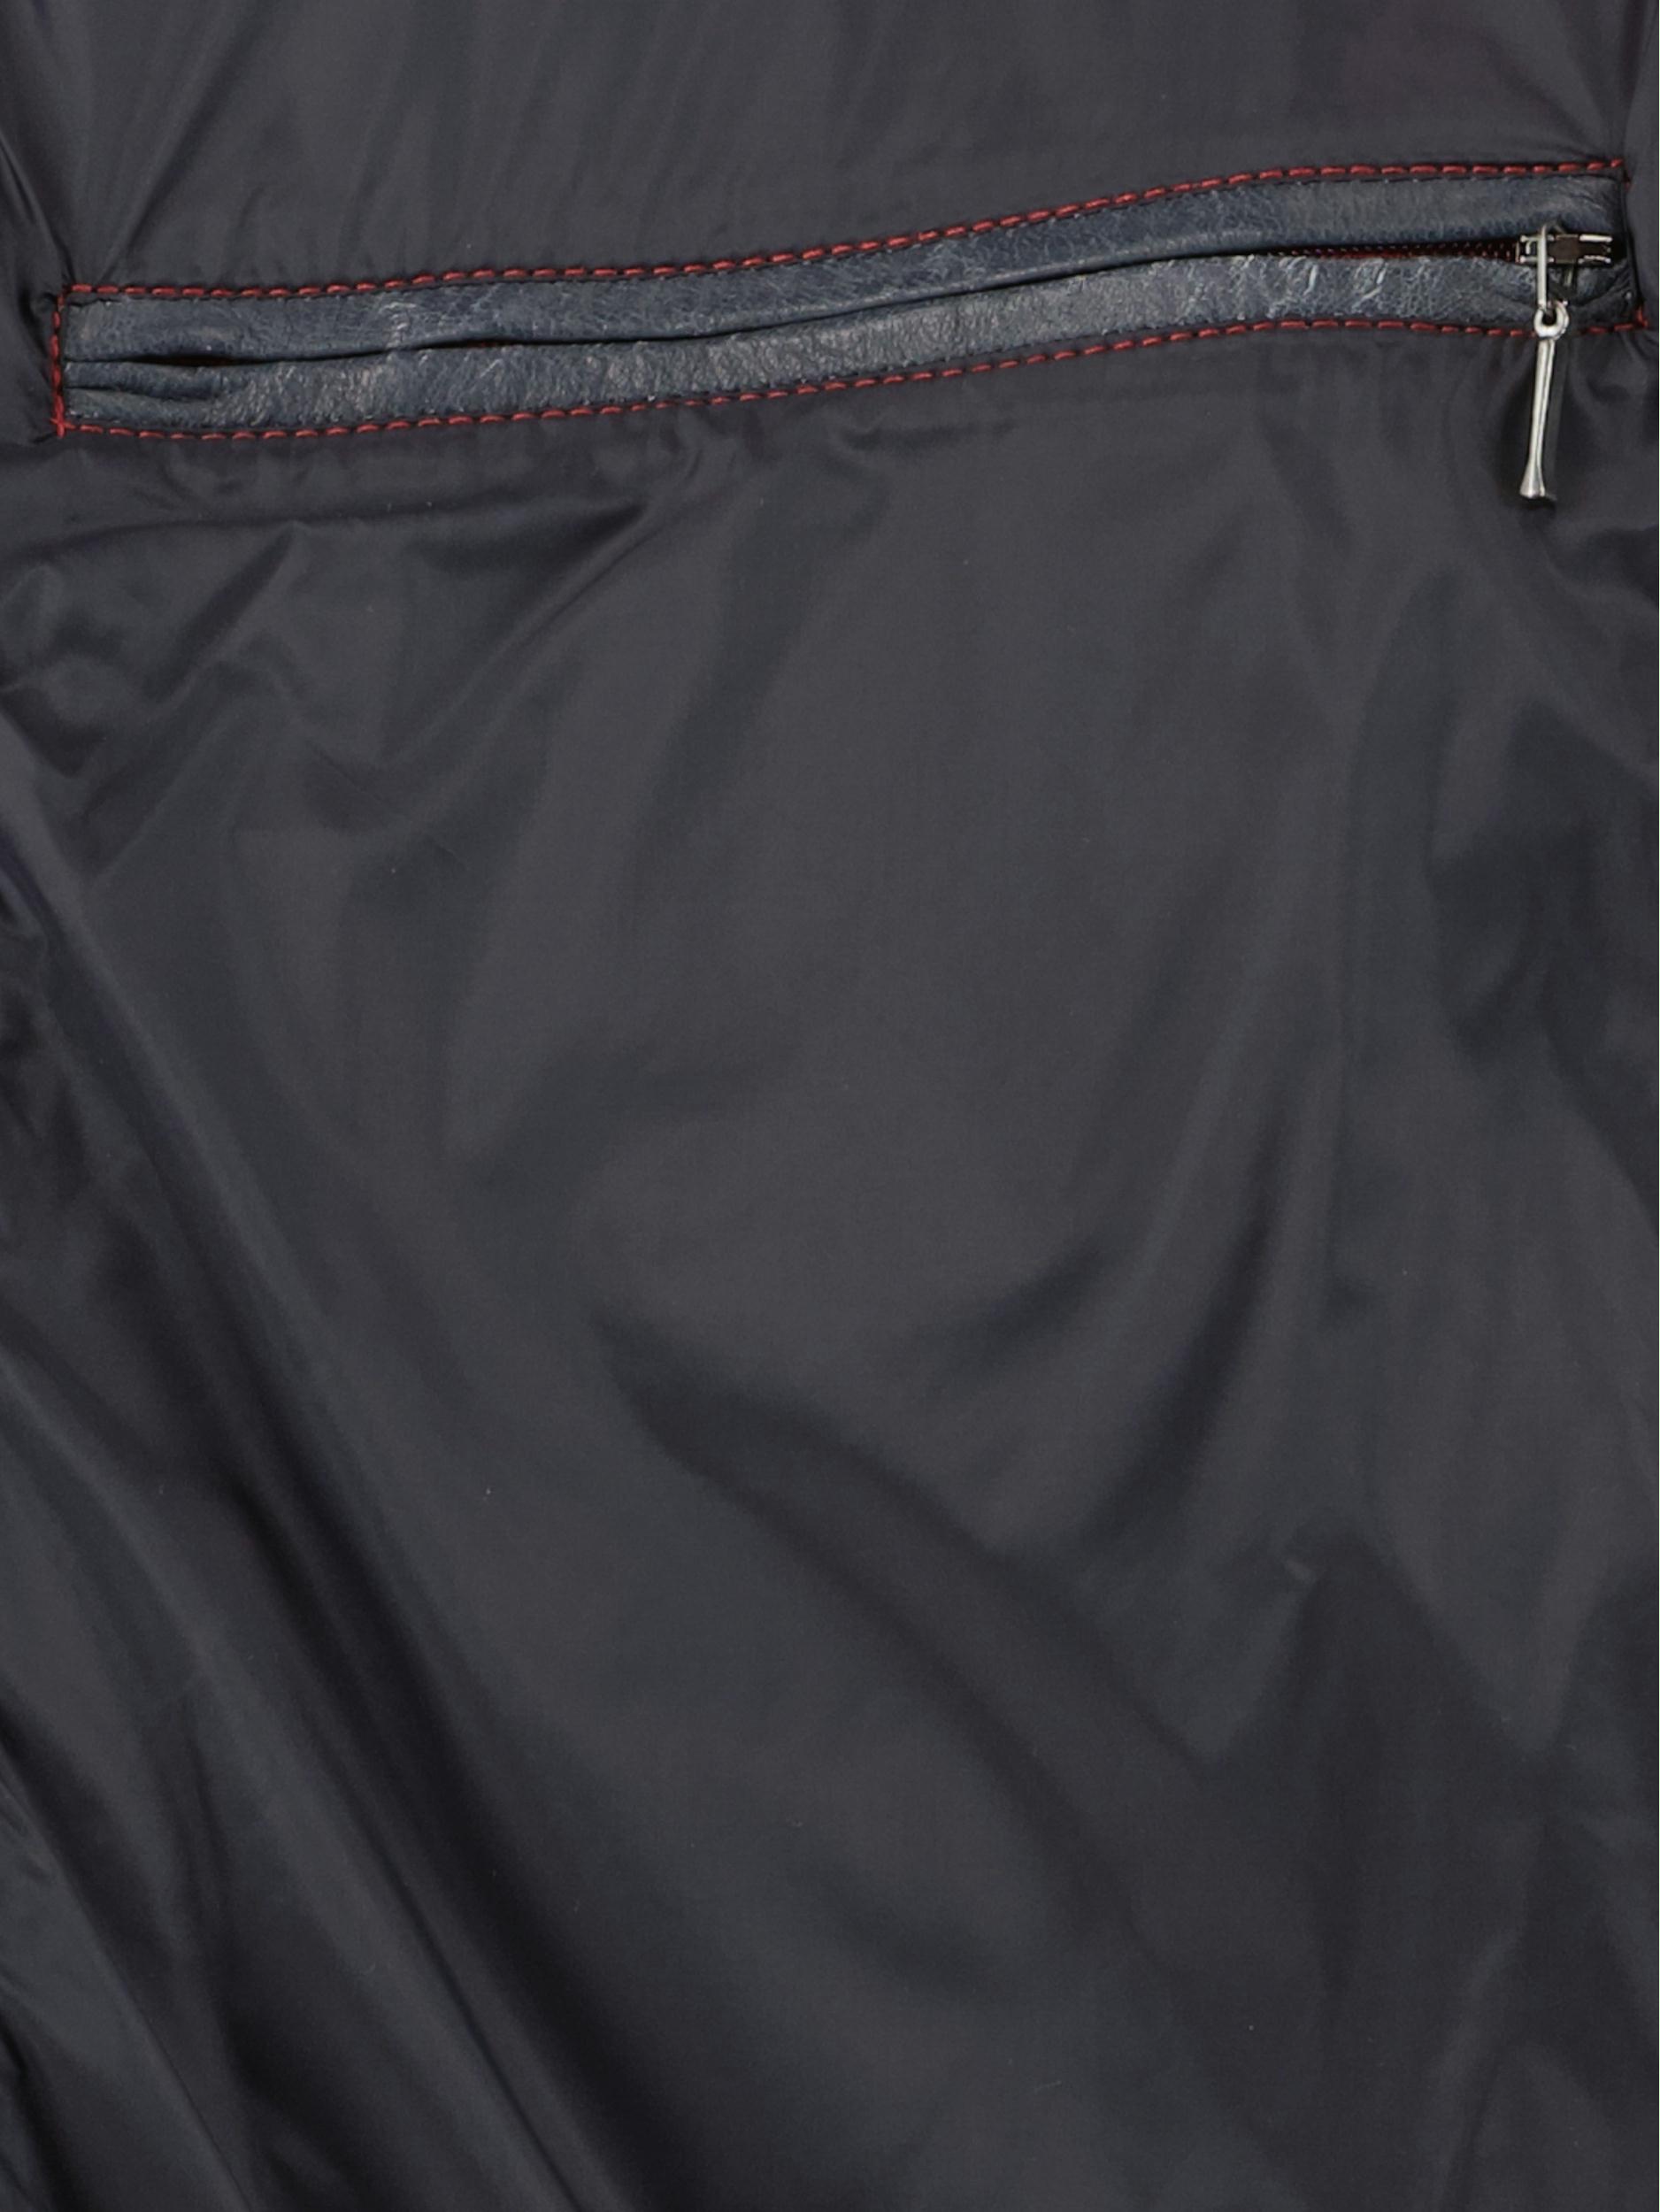 Donders 1860 Lederen jack Blauw Leather Jacket 52284/780